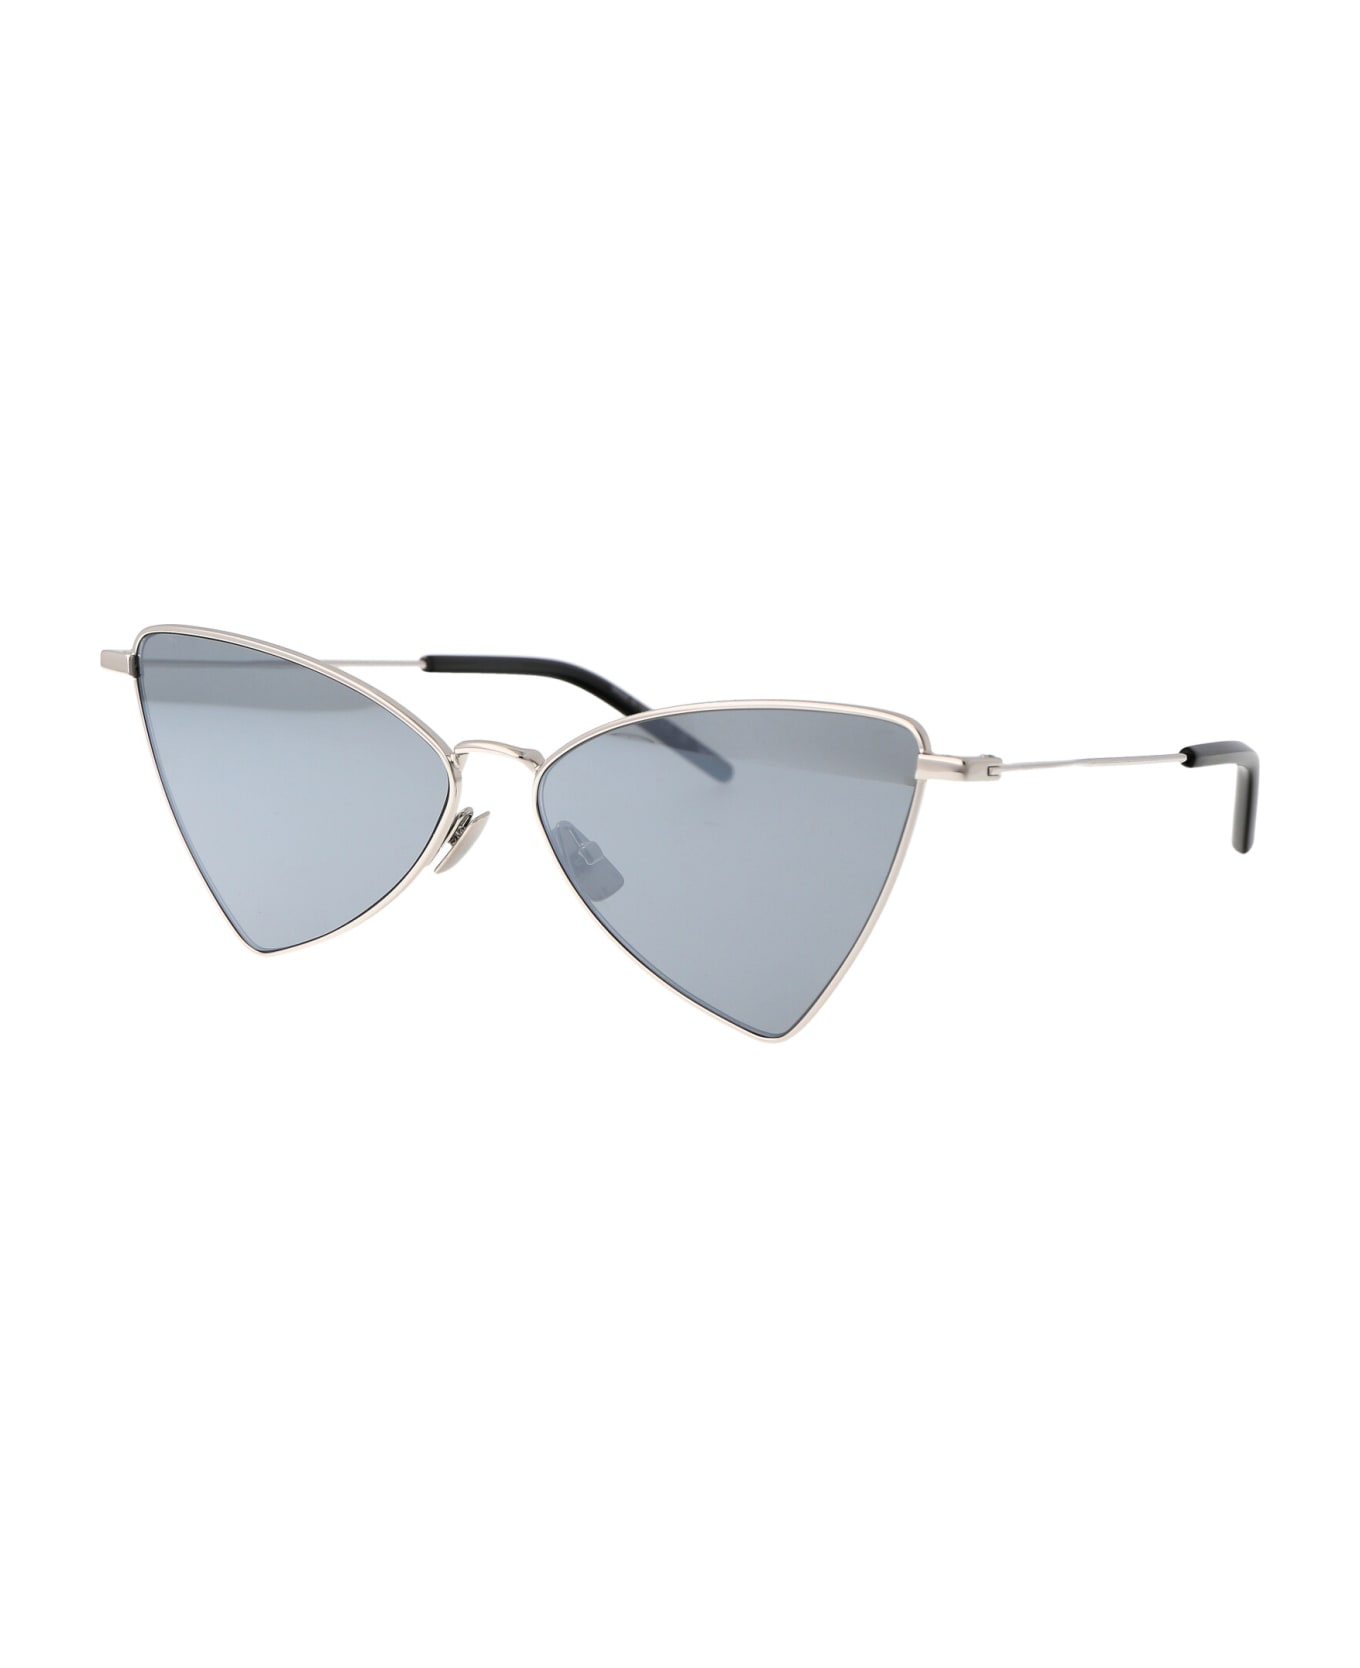 Saint Laurent Eyewear Sl 303 Jerry Sunglasses - 010 SILVER SILVER SILVER サングラス